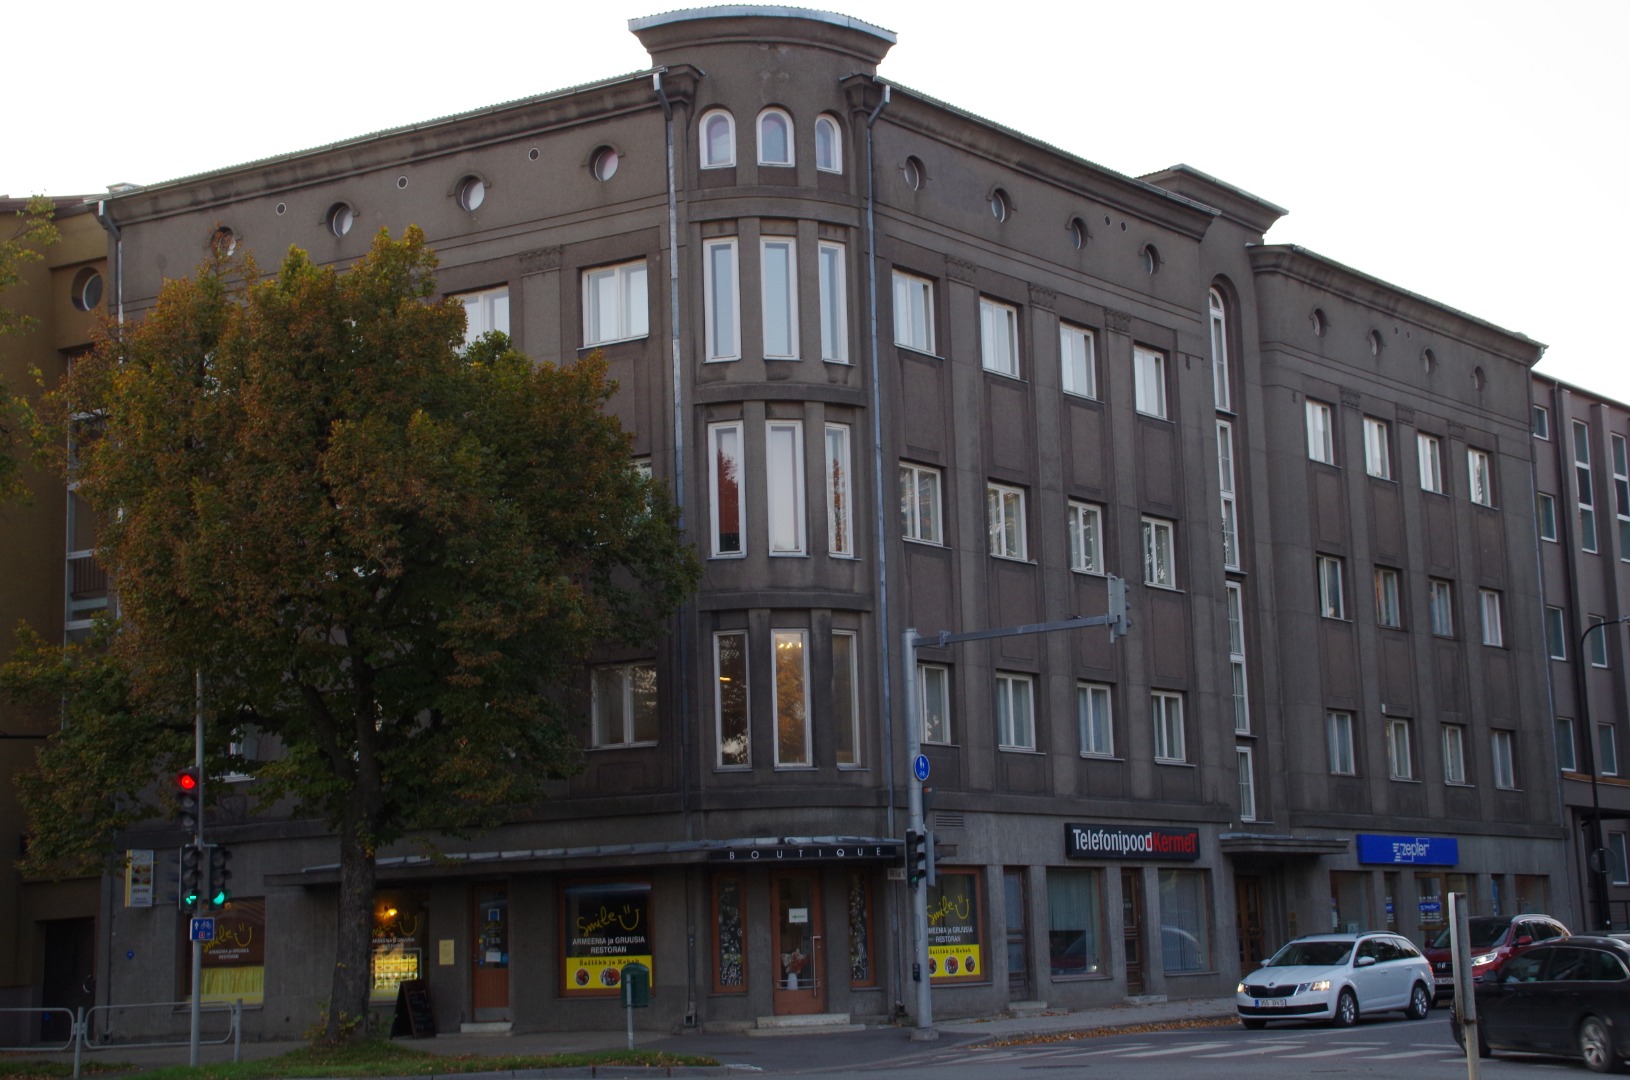 Building Riga Street no. 85, where the German Salapolice (Gestapo) was located. rephoto